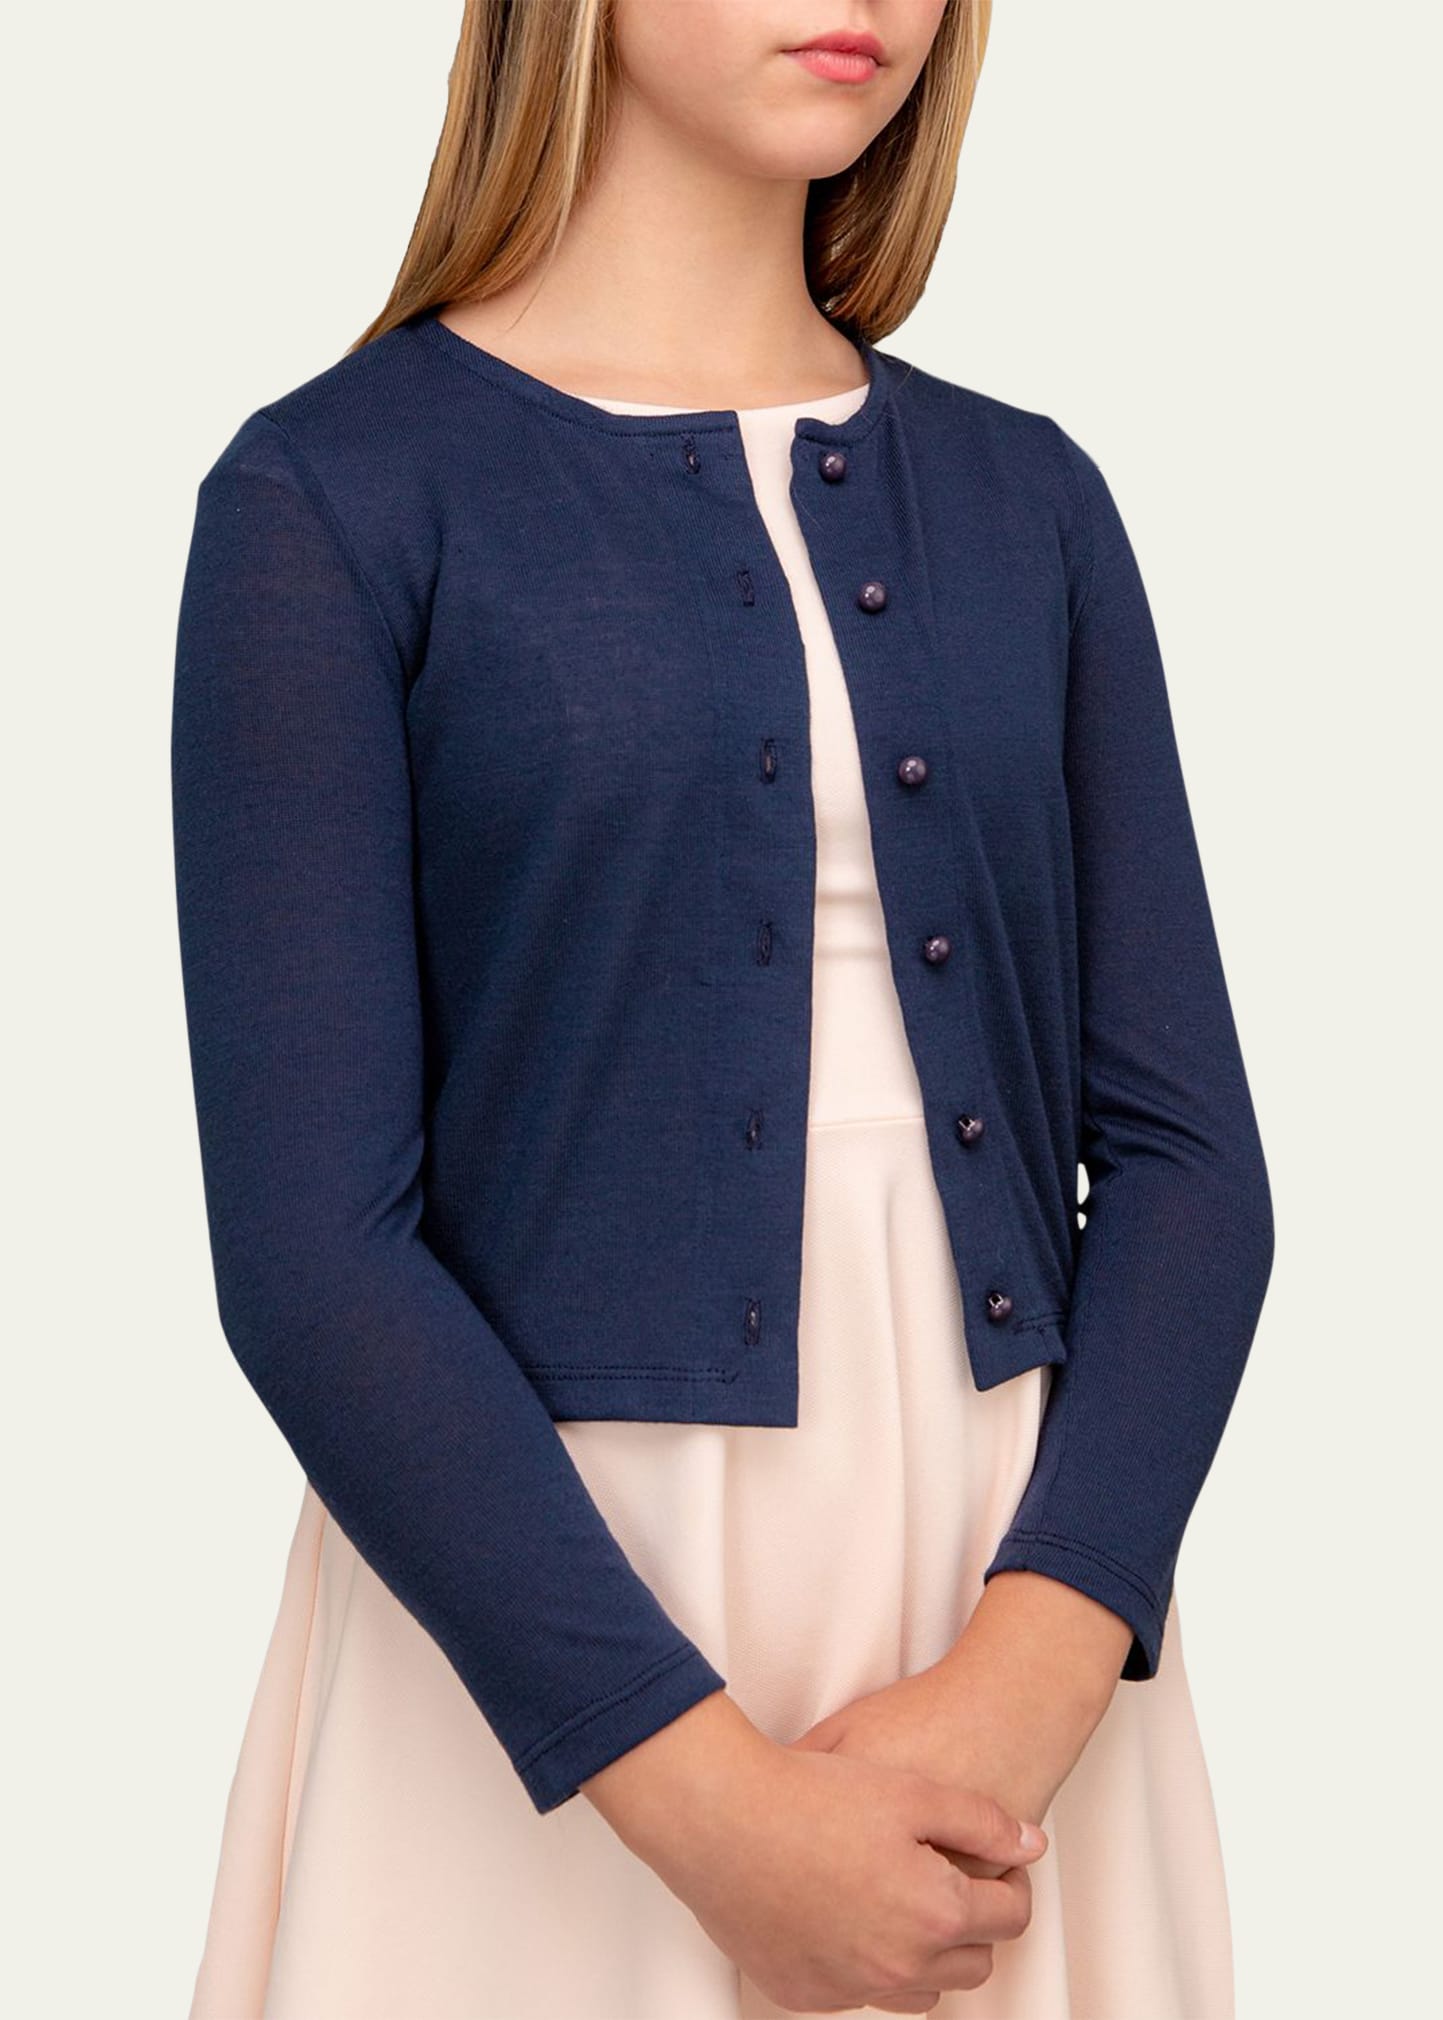 Girl's Long-Sleeve Cardigan, Size S-XL